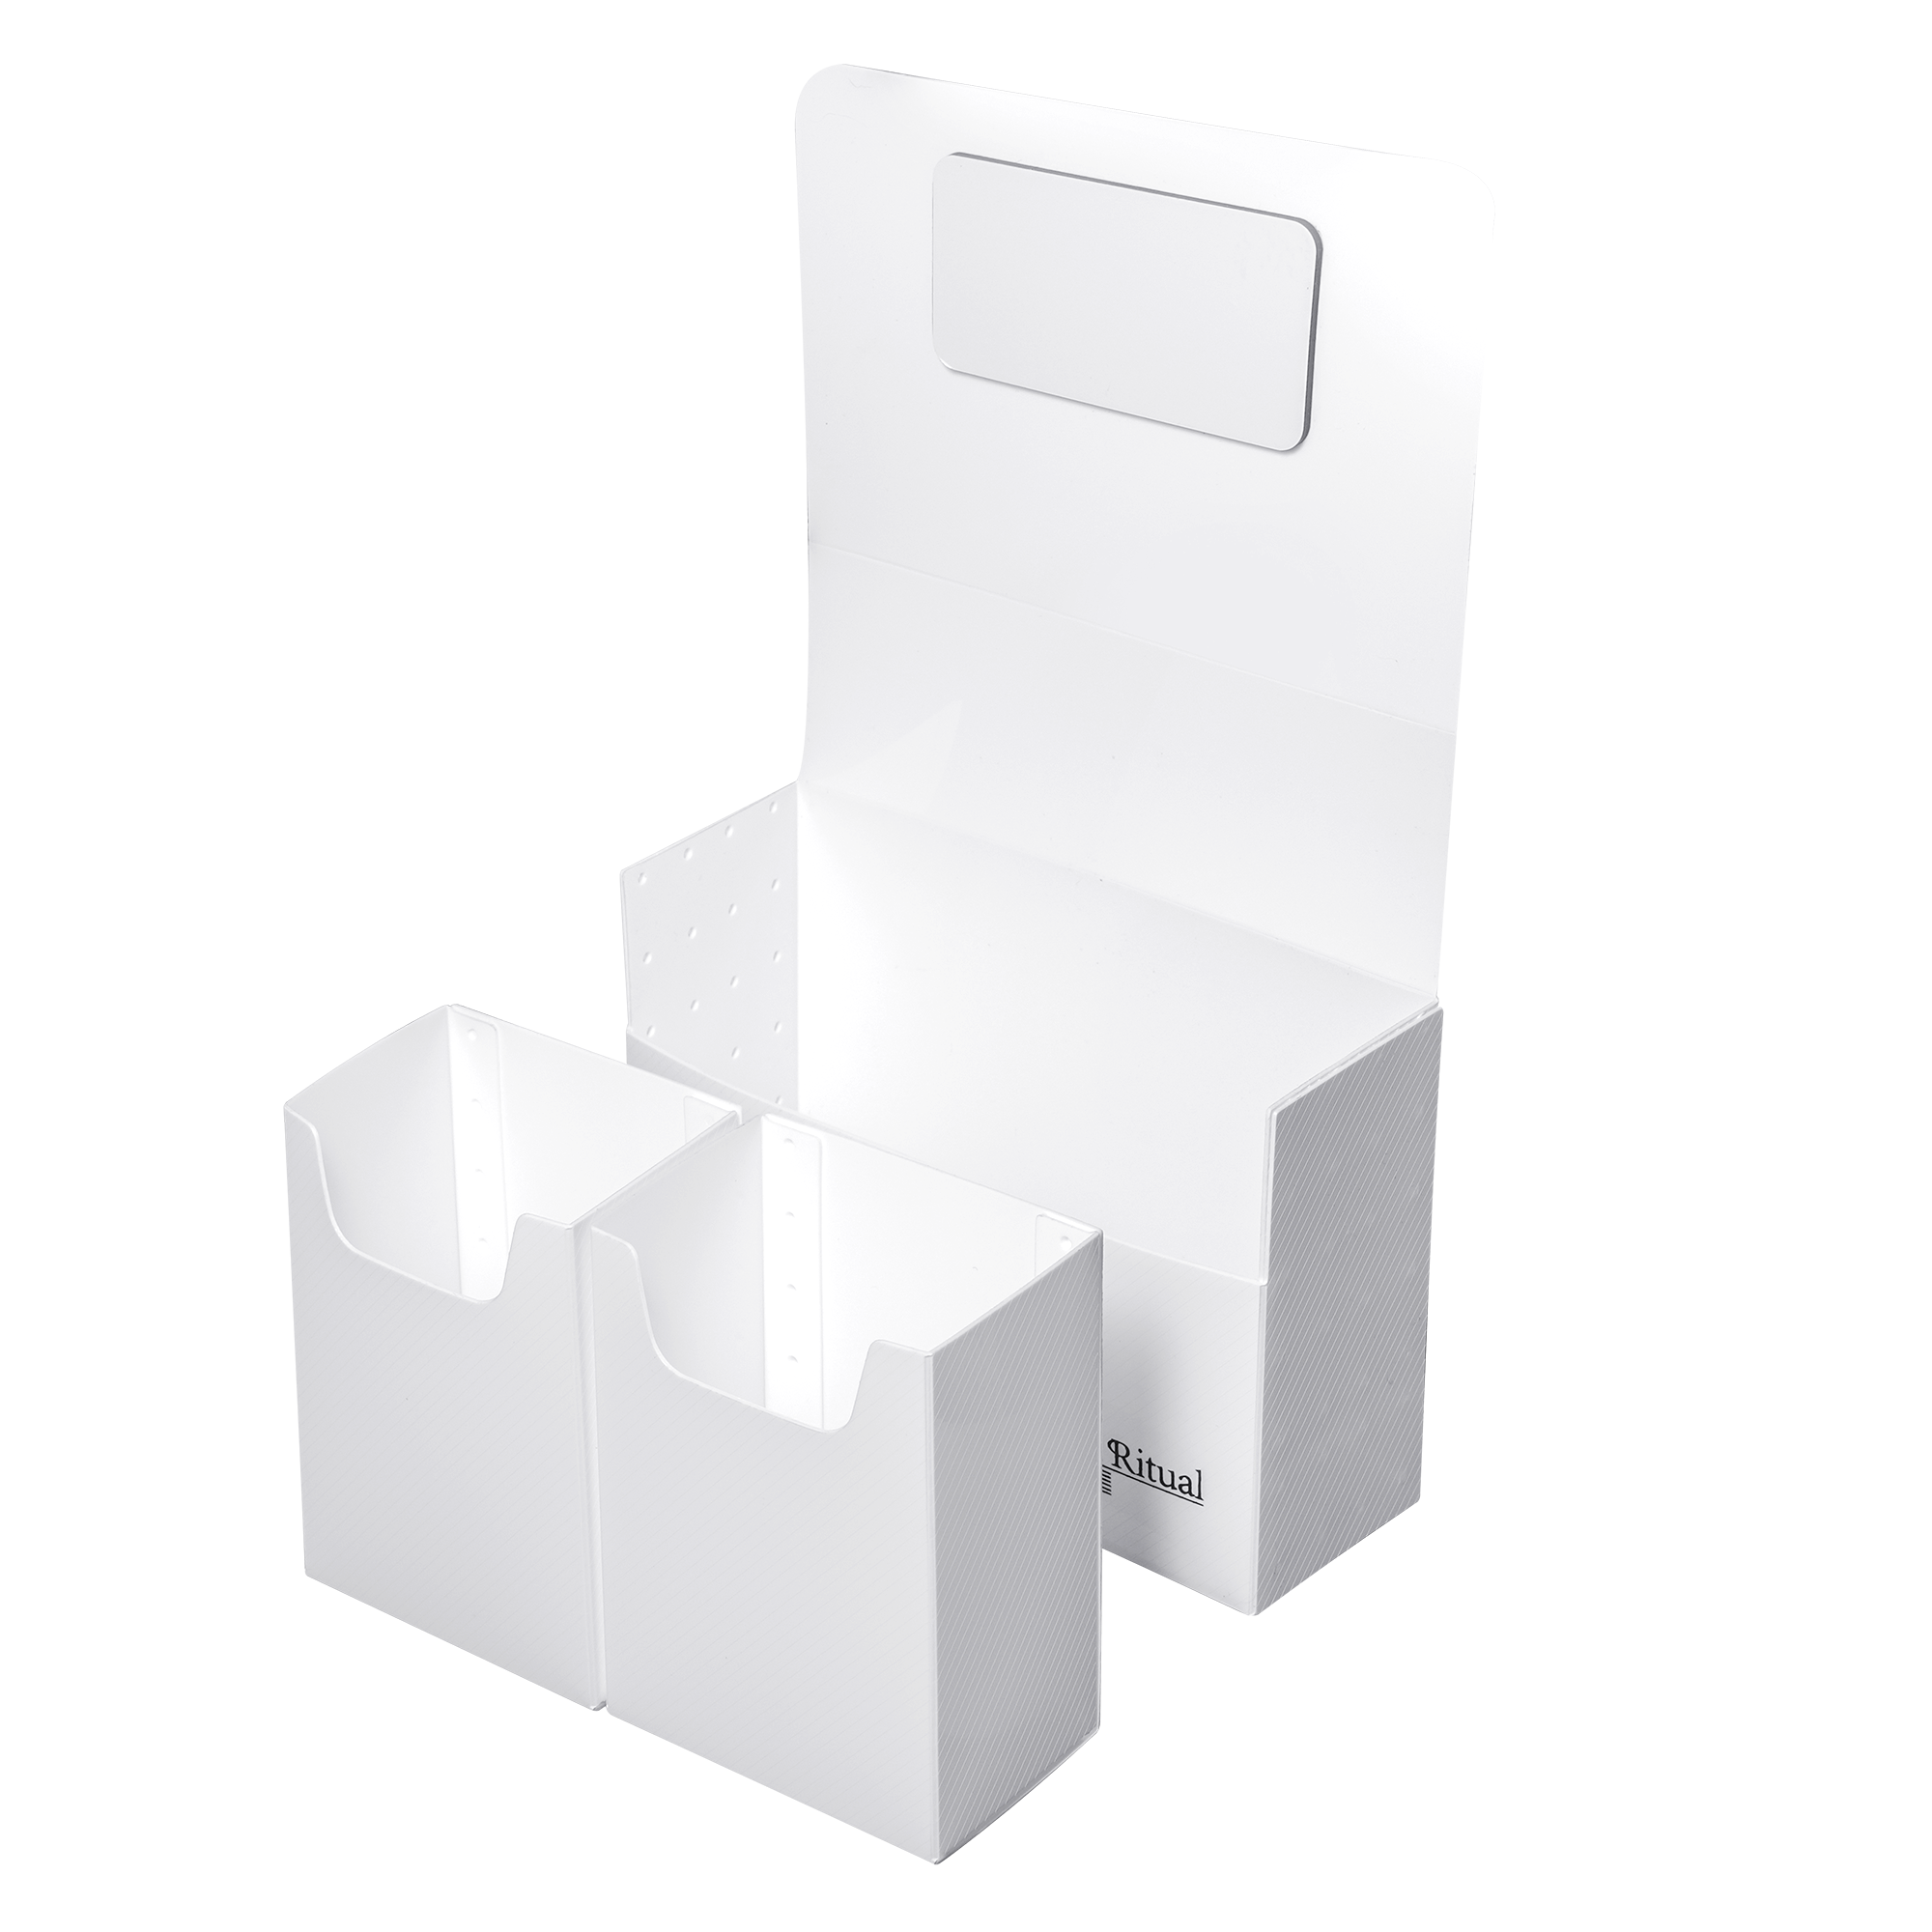 Deck Box: The Double White